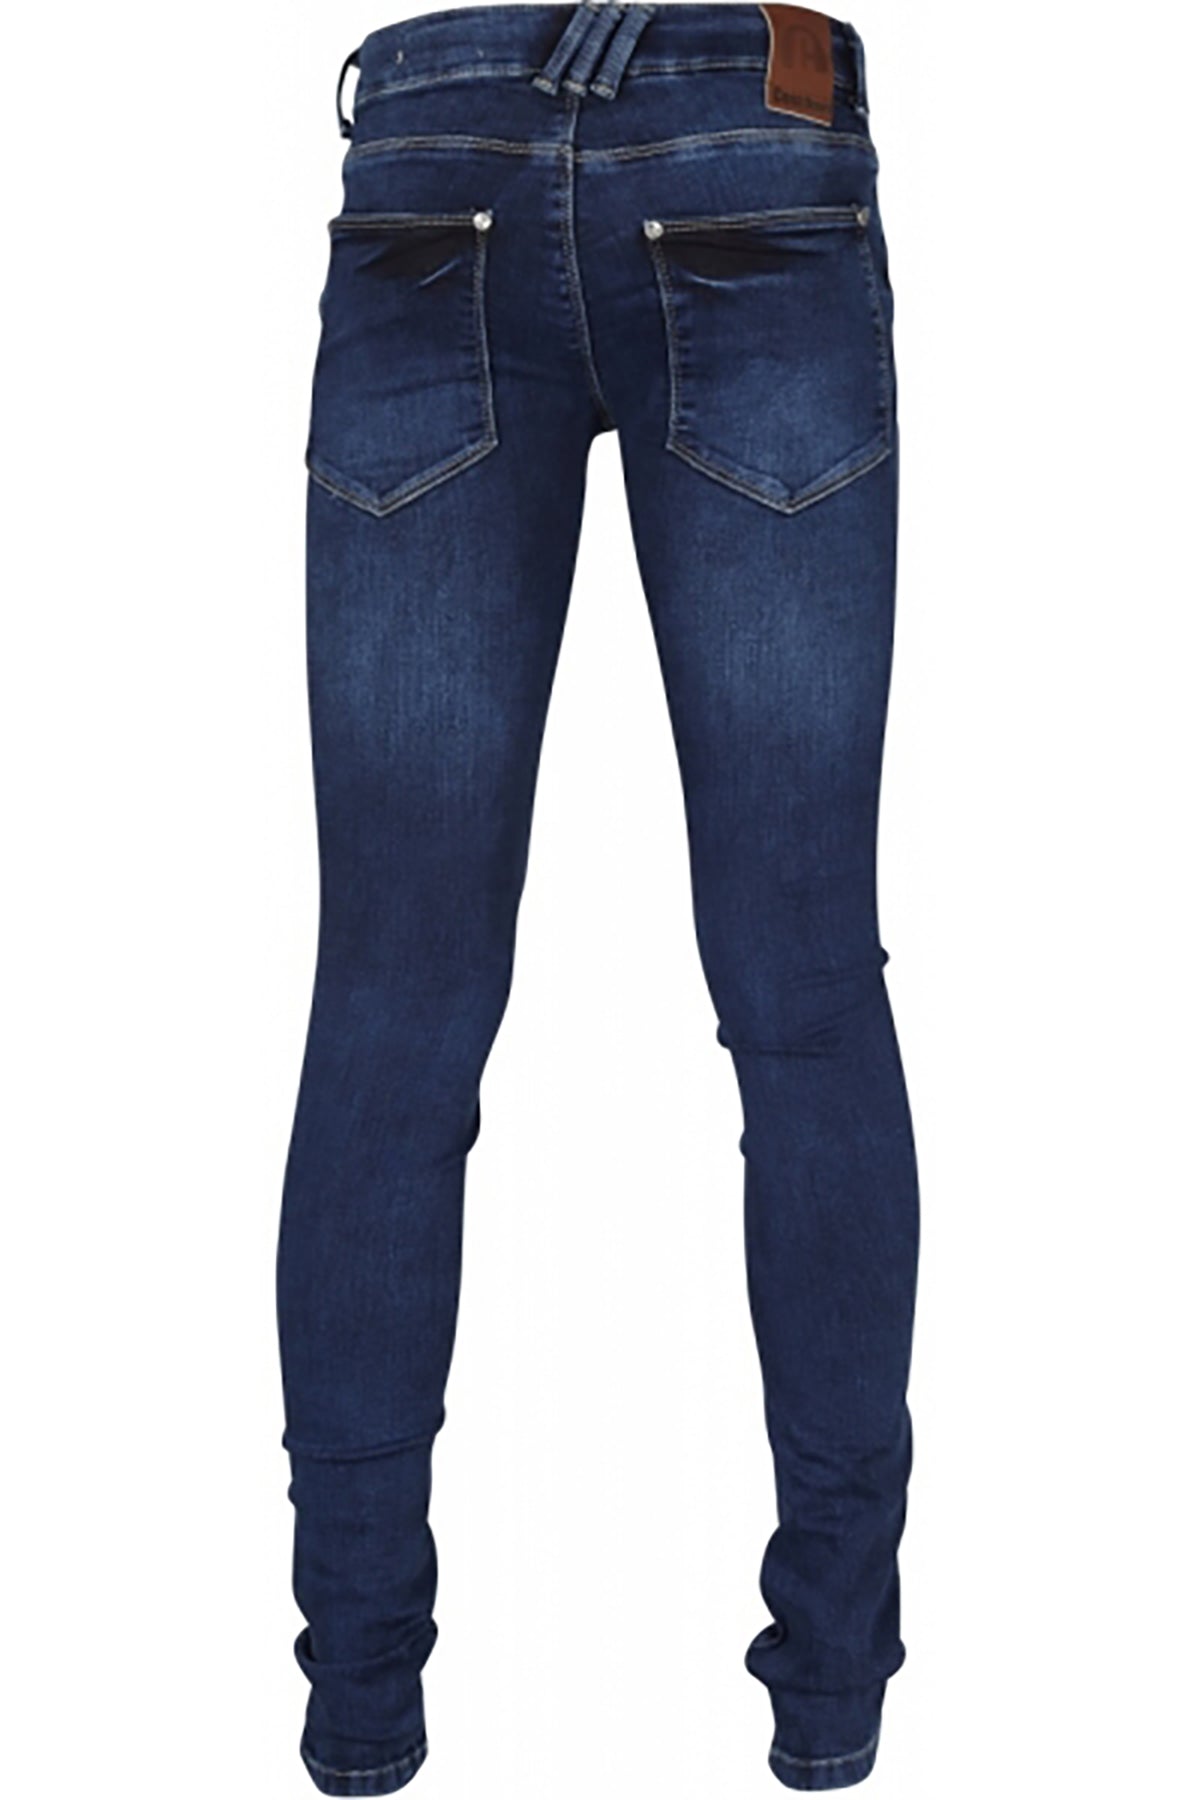 Cost:bart CBBowie Jeans Jeans 807 dark blue wash